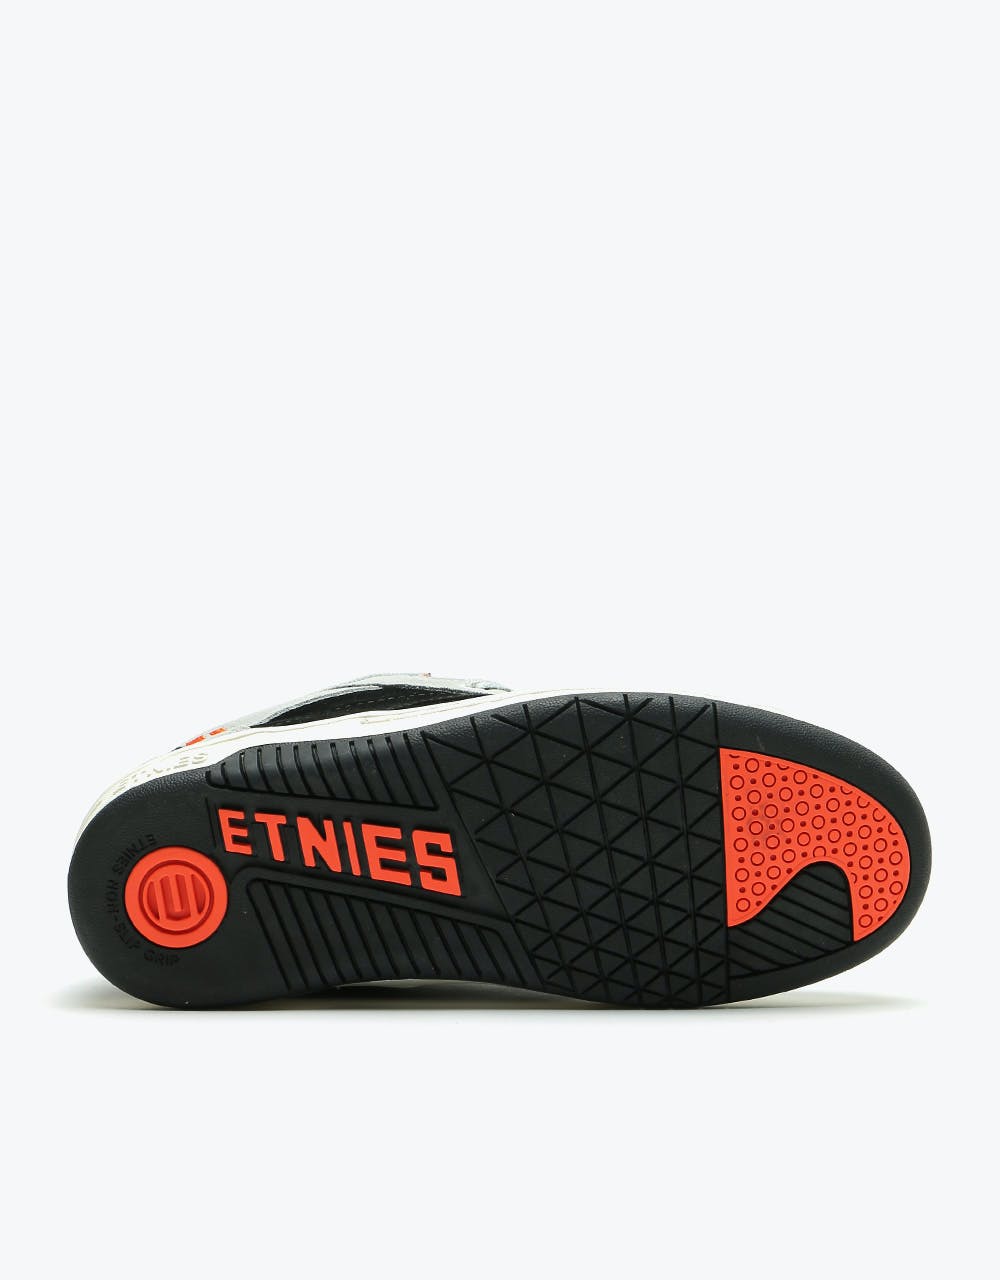 Etnies Czar Skate Shoes - Grey/Black